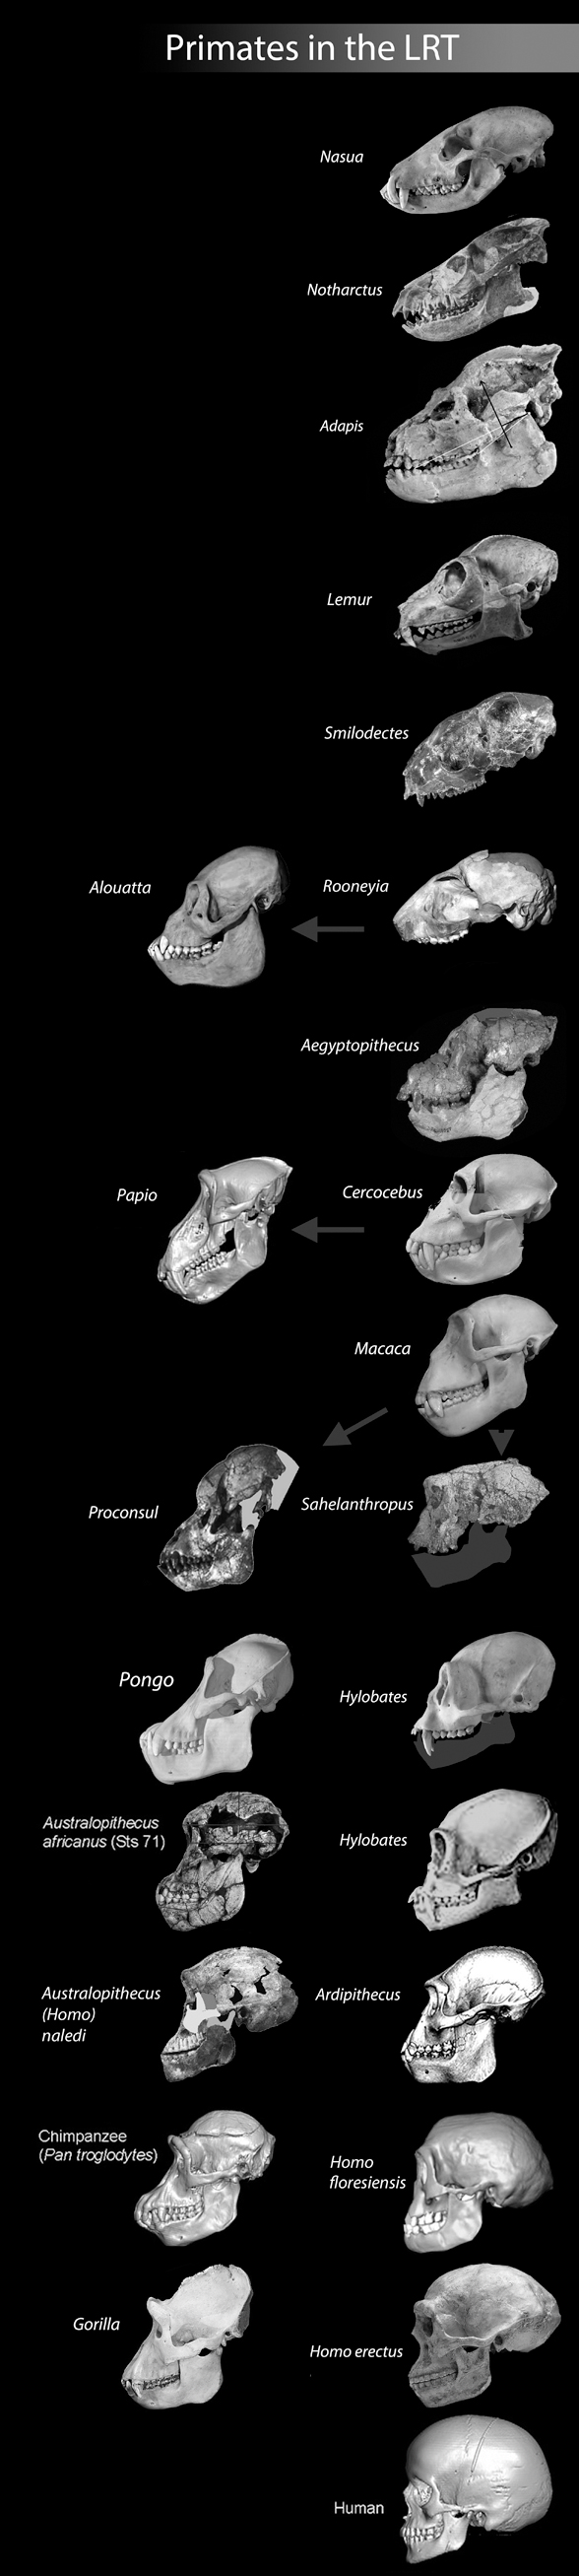 human evolution from Homo to Hylobates to Nasua